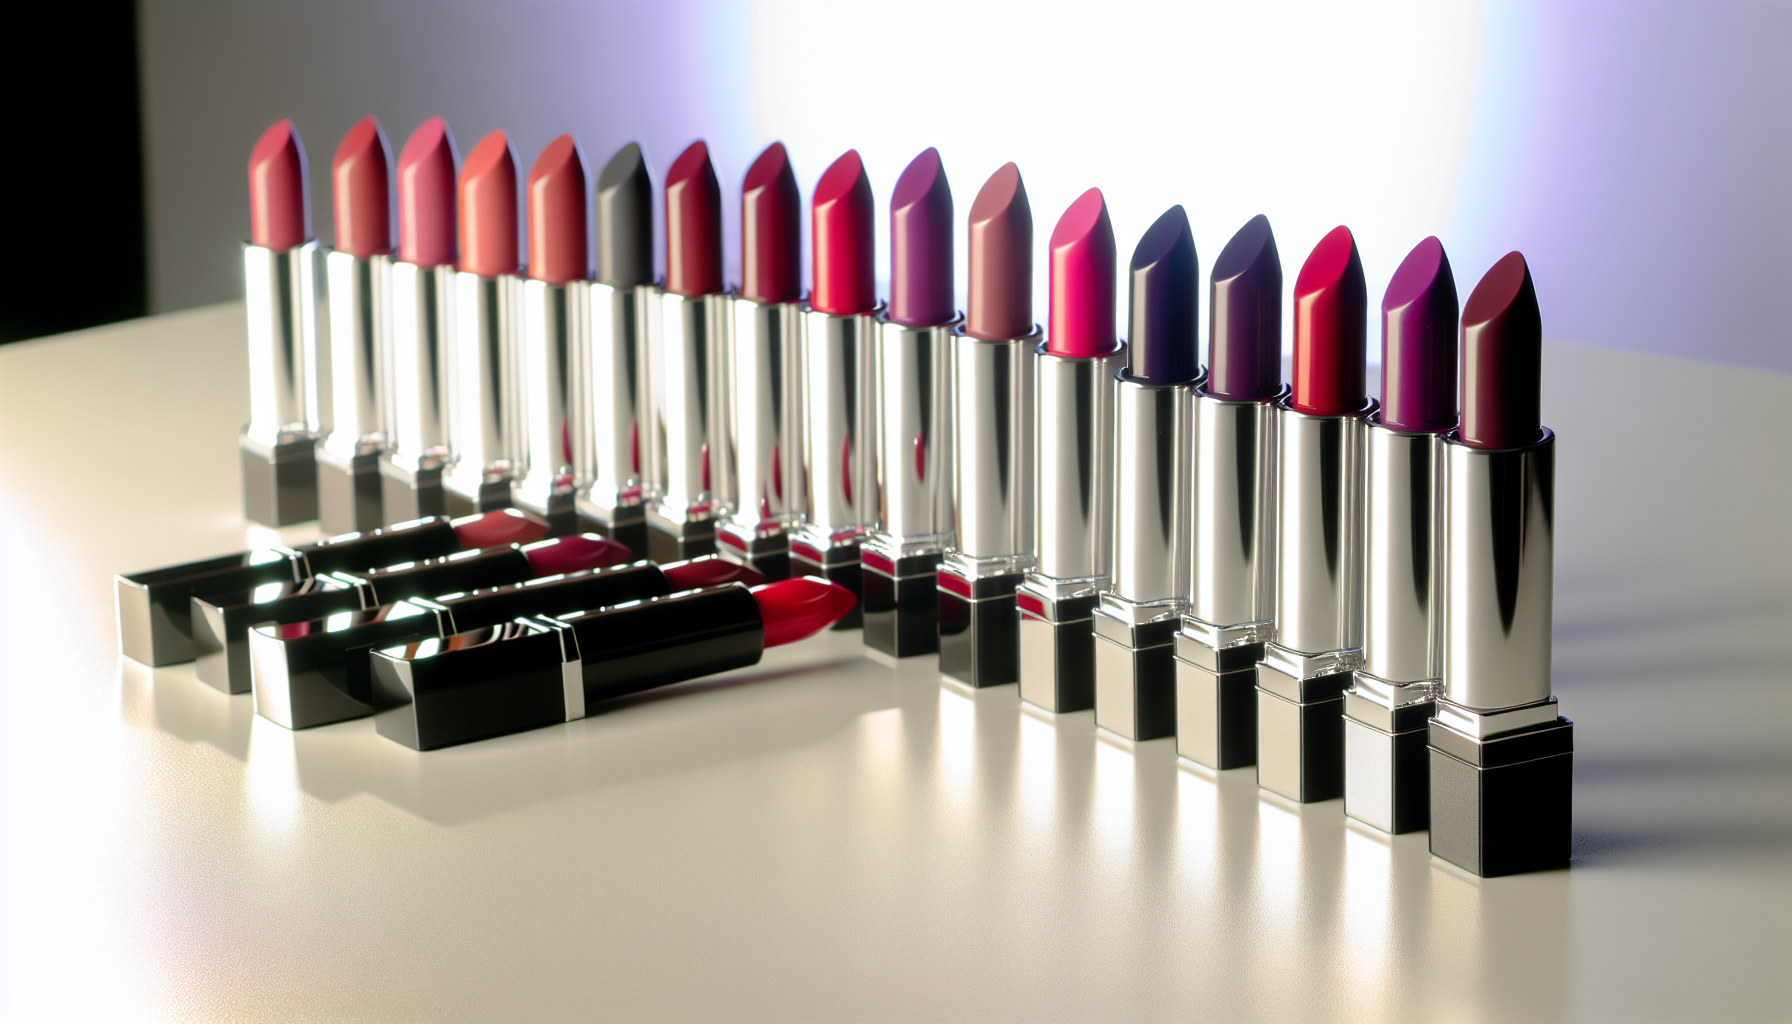 Various shades of vinyl lipstick